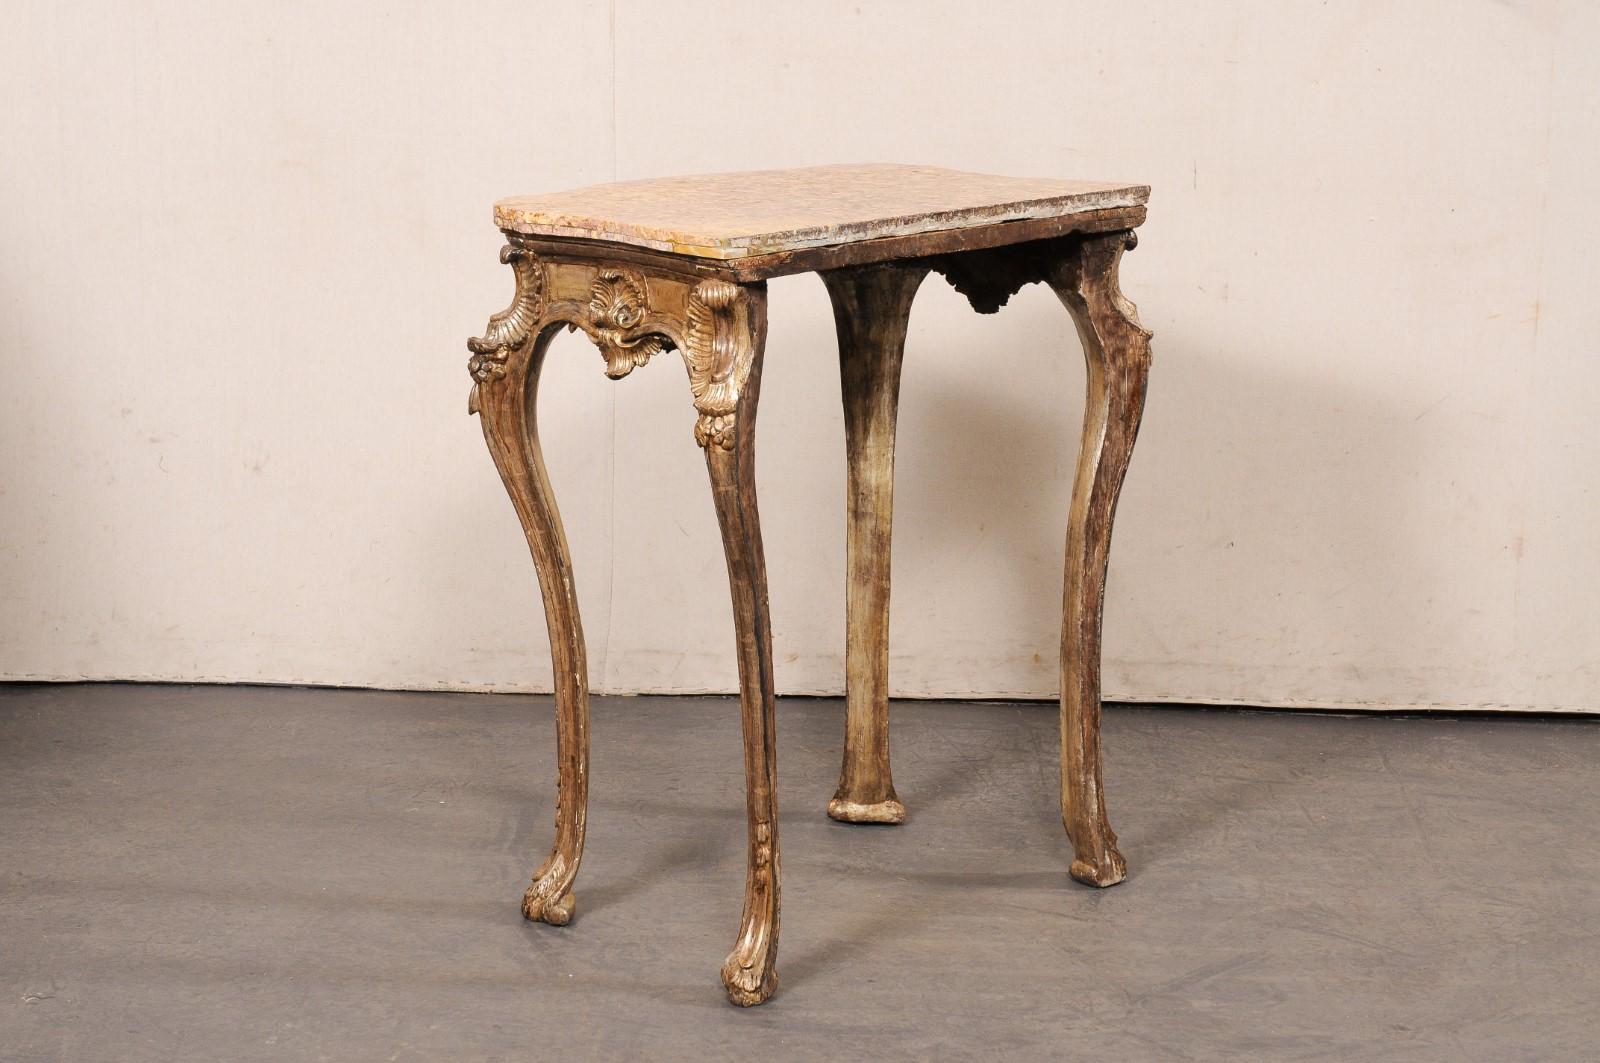 Italian Period Rococo Ornate Accent Table w/its Original Finish & Marble Top For Sale 4